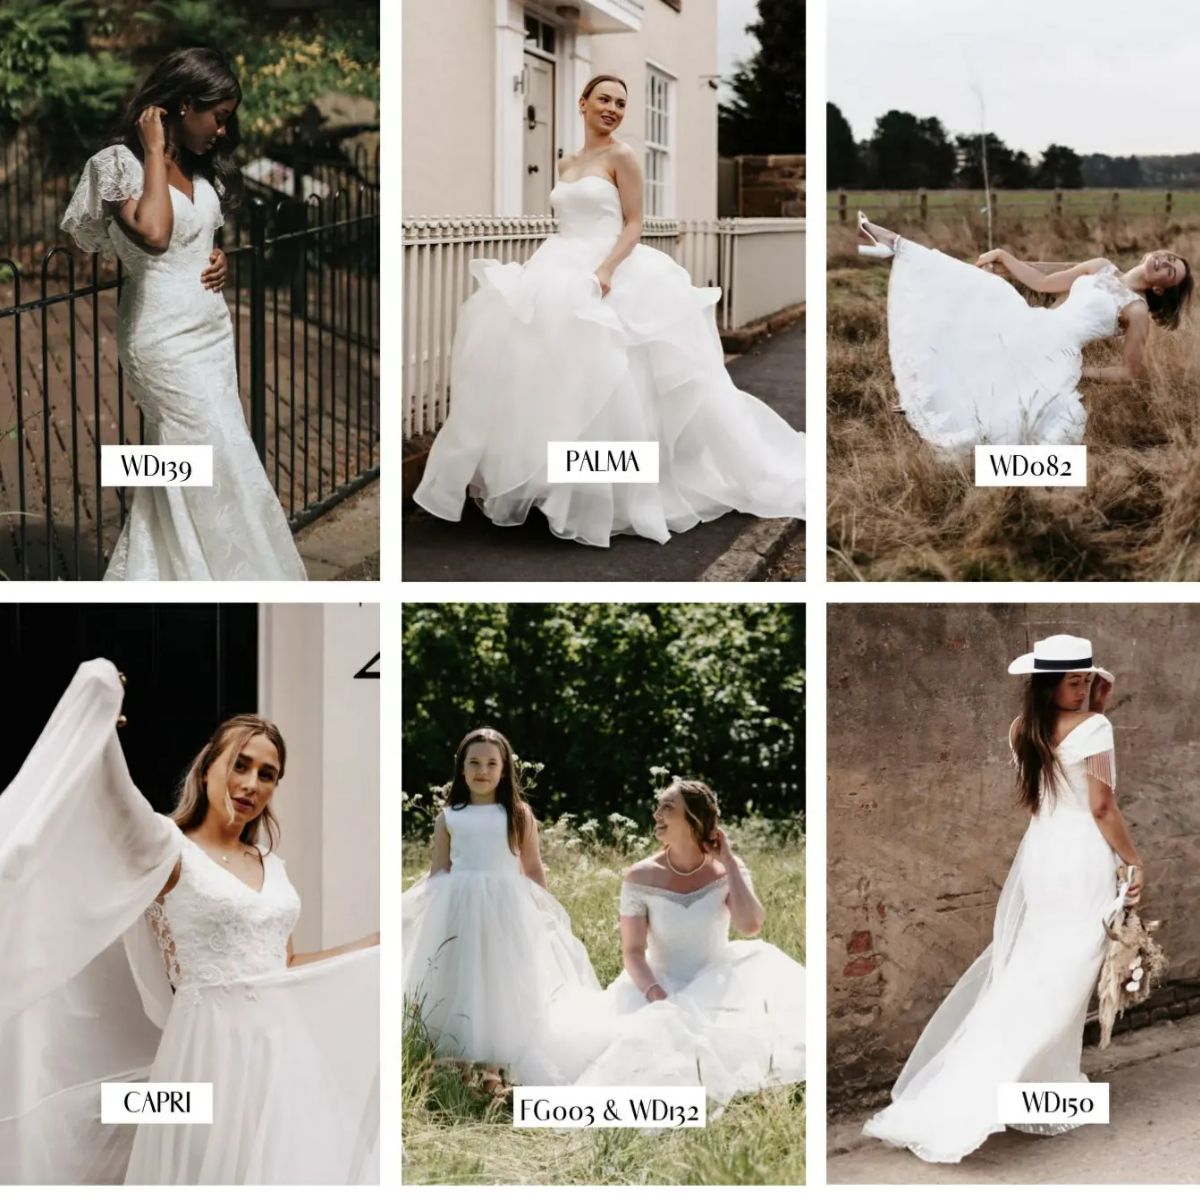 Best Dress 2 Impress Bridal-Image-17